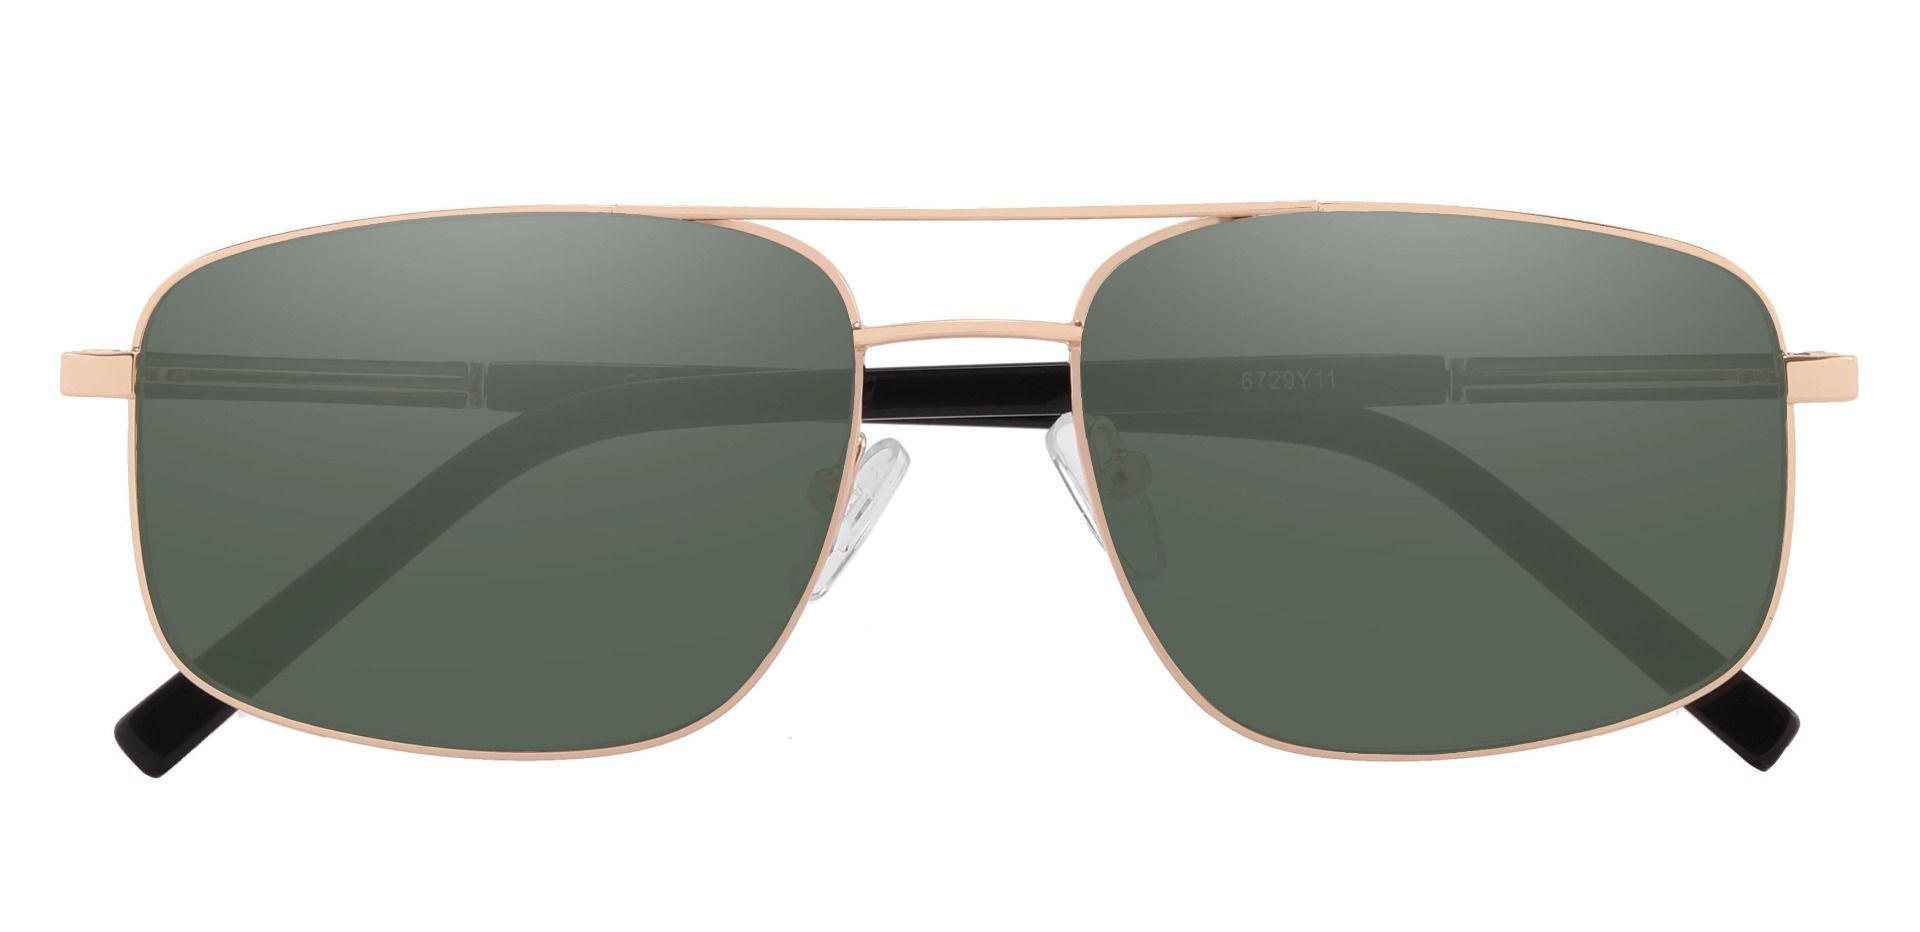 Davenport Aviator Lined Bifocal Sunglasses - Gold Frame With Green Lenses